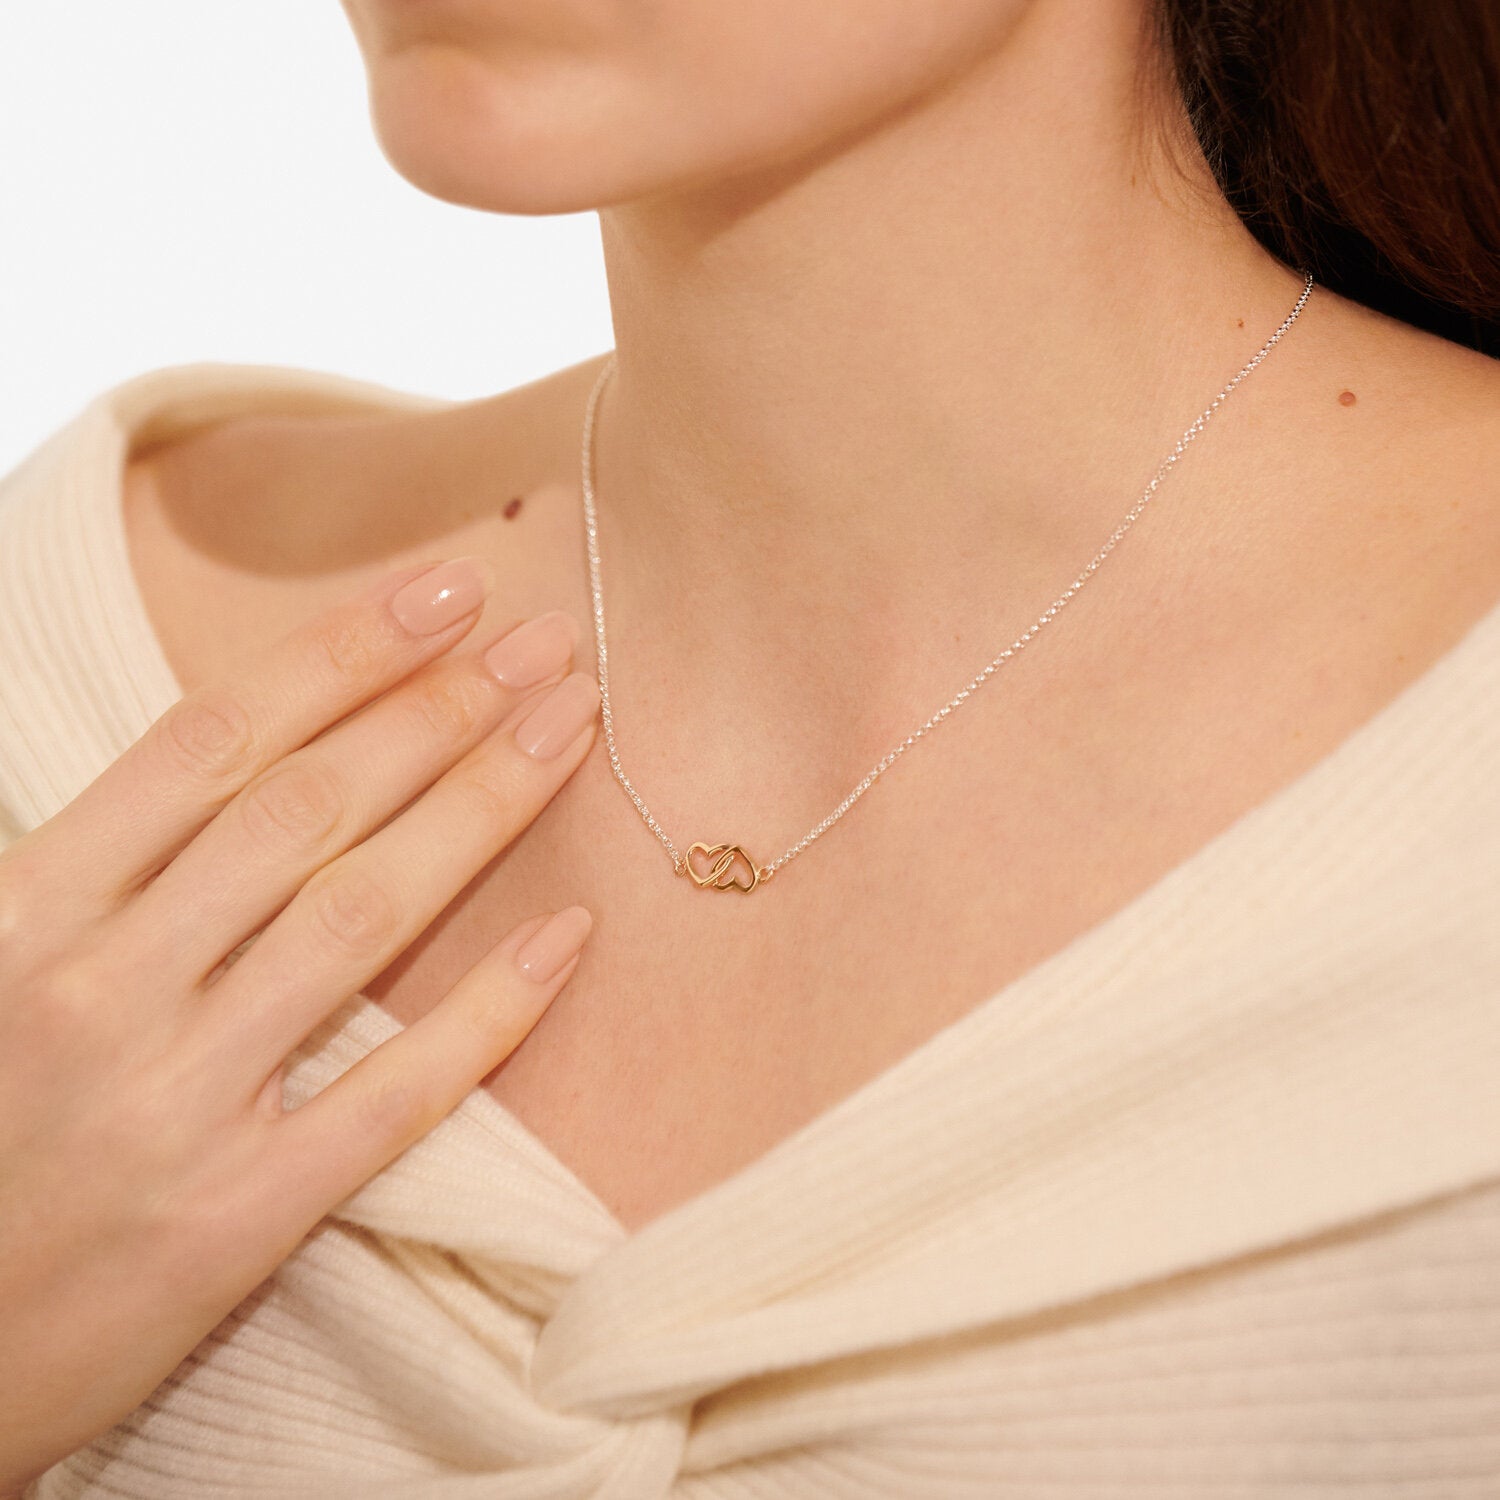 A Little - Beautiful Friend Necklace - Joma Jewellery